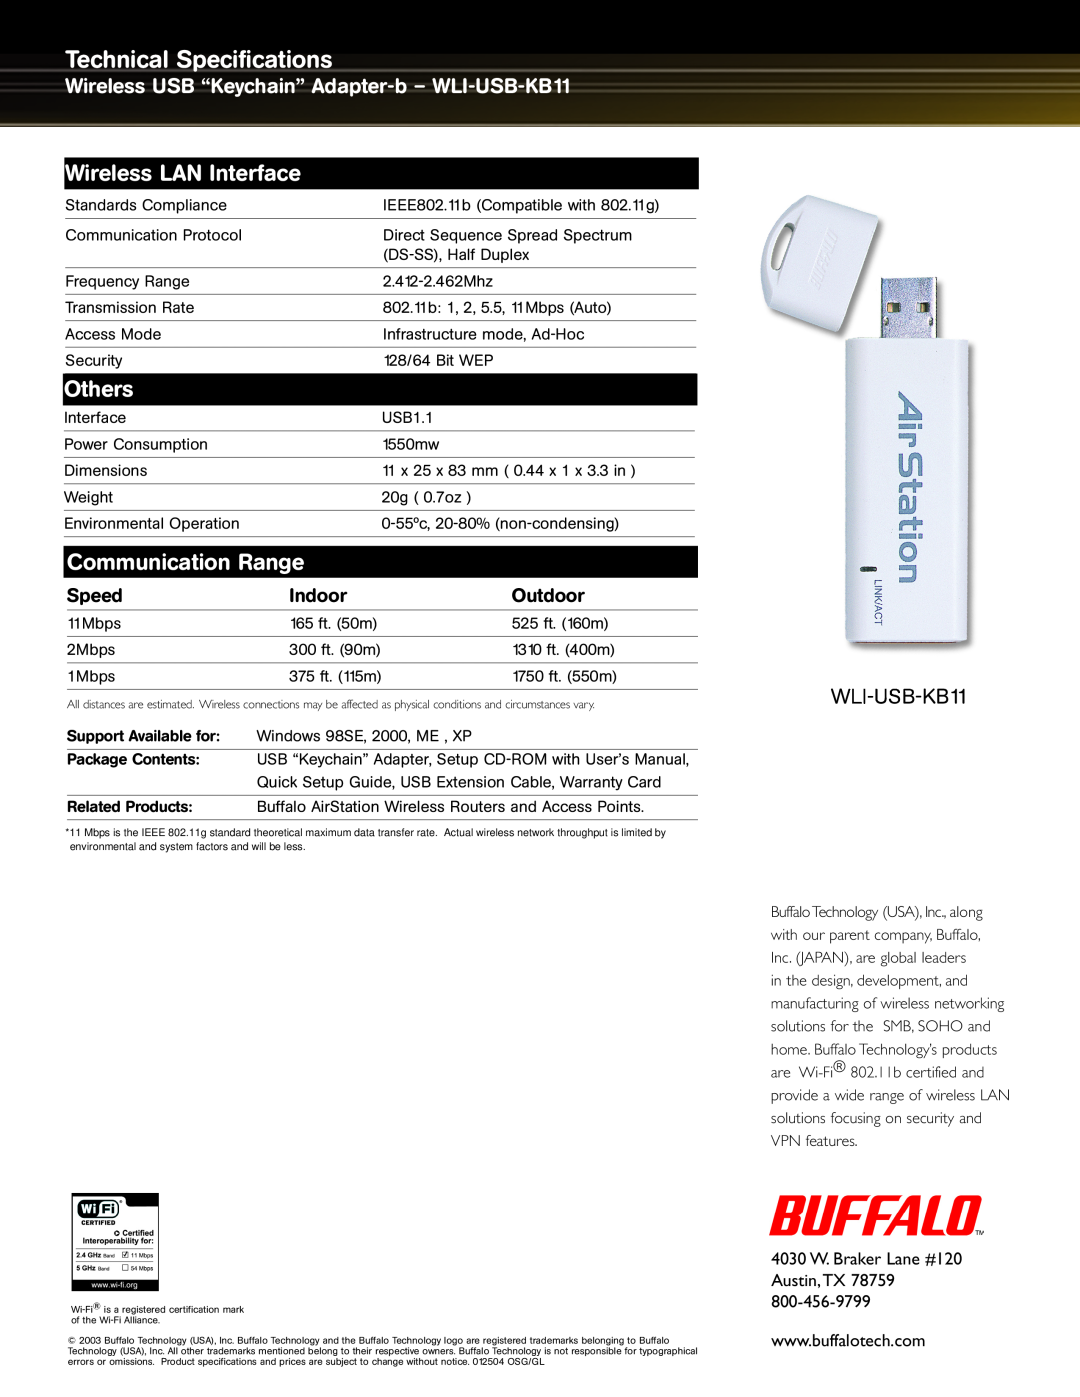 Buffalo Technology WLI-USB-KB11 W -USB-KB11, 4030 W. Braker Lane #120 Austin,TX 78759, Technical Specifications, Speed 